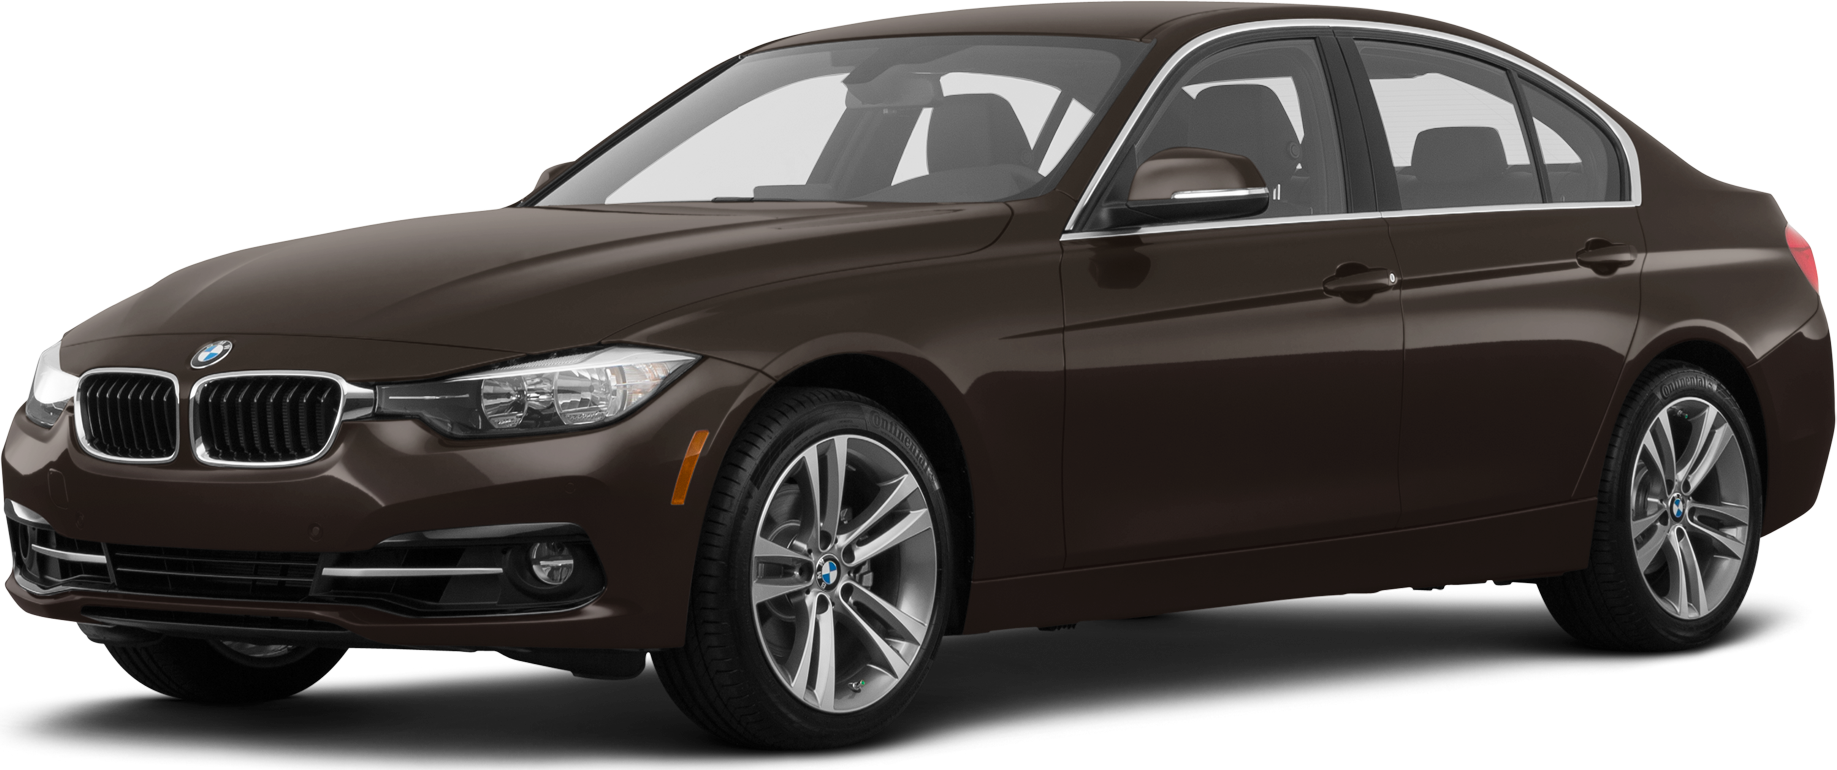 2017 BMW 3 Series Sedan Owners Manual 